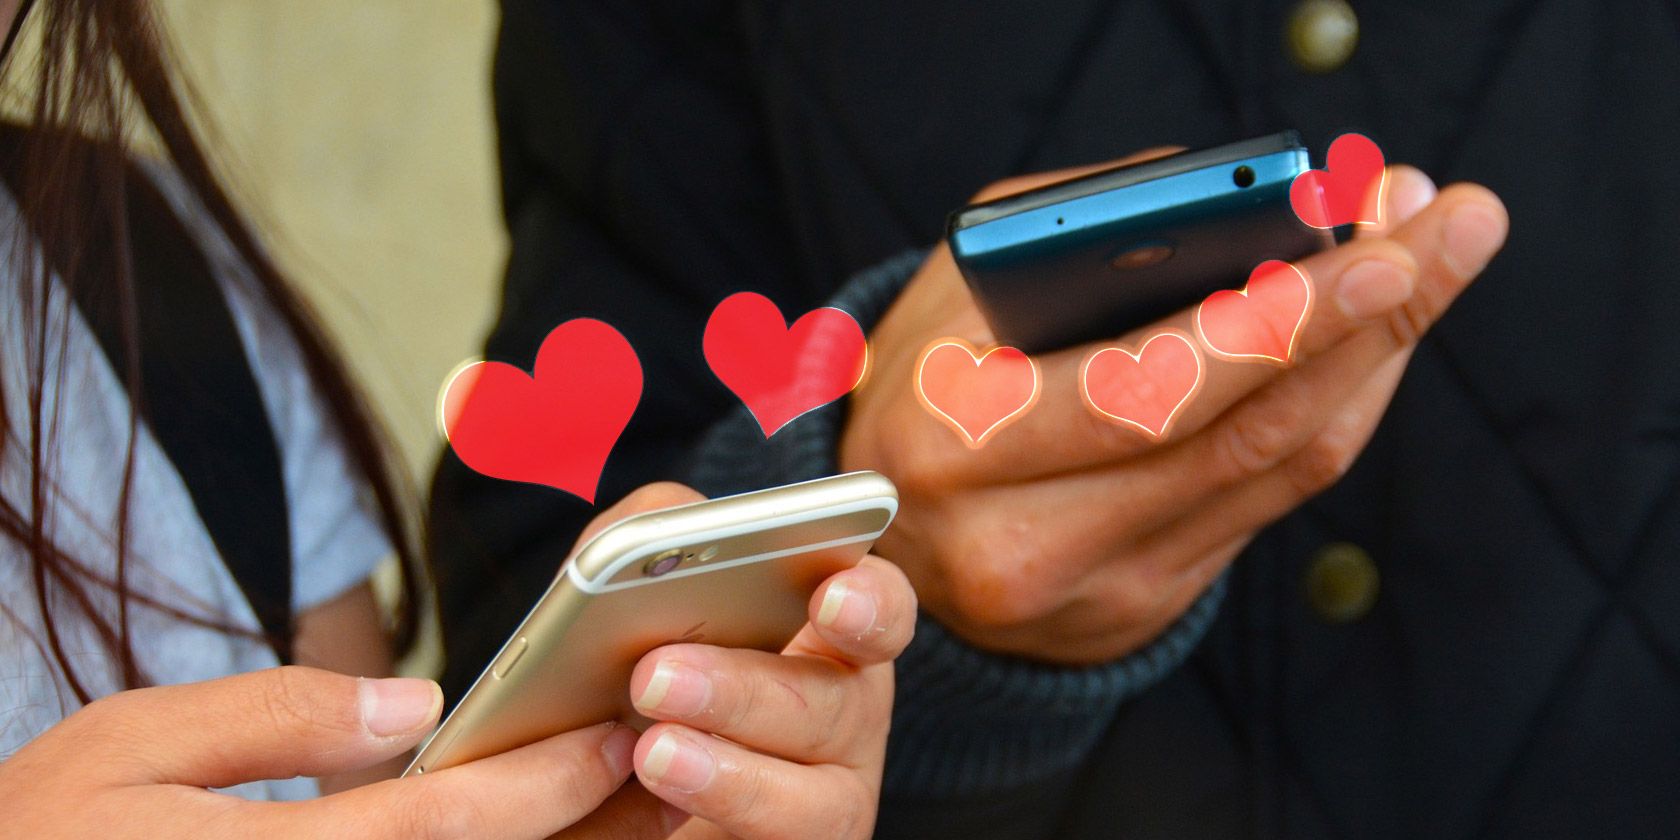 BestSmmPanel Safe Online Dating Is Possible! dating apps